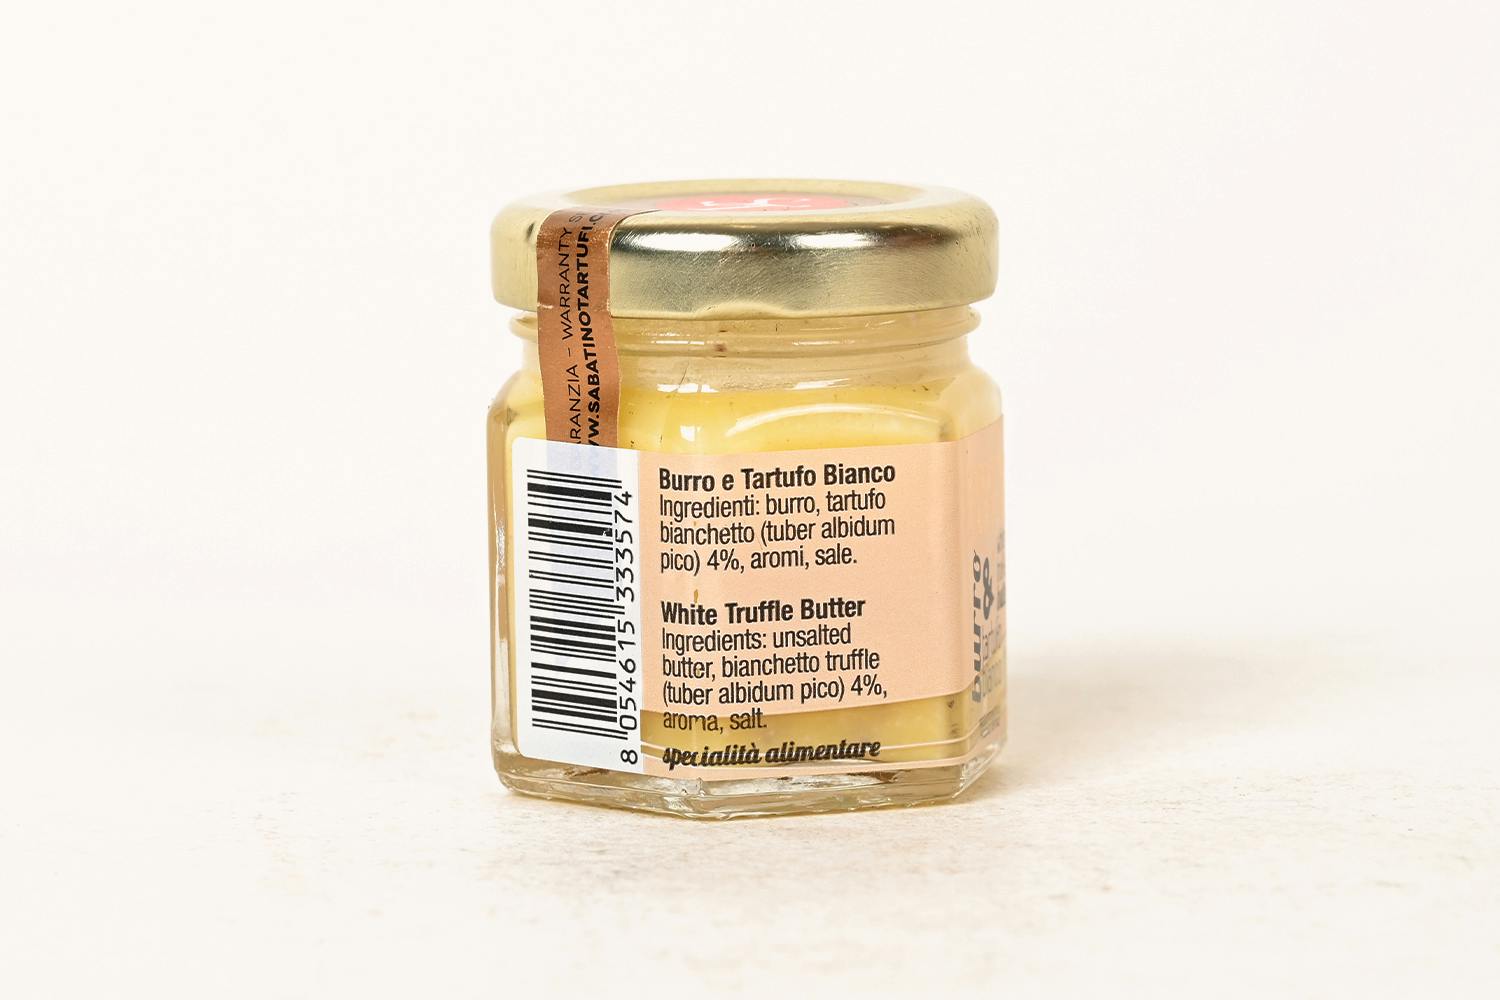 /s/a/sabatino-white-truffle-butter-30g-2_8sjpvysfp1cz0mvr.jpg